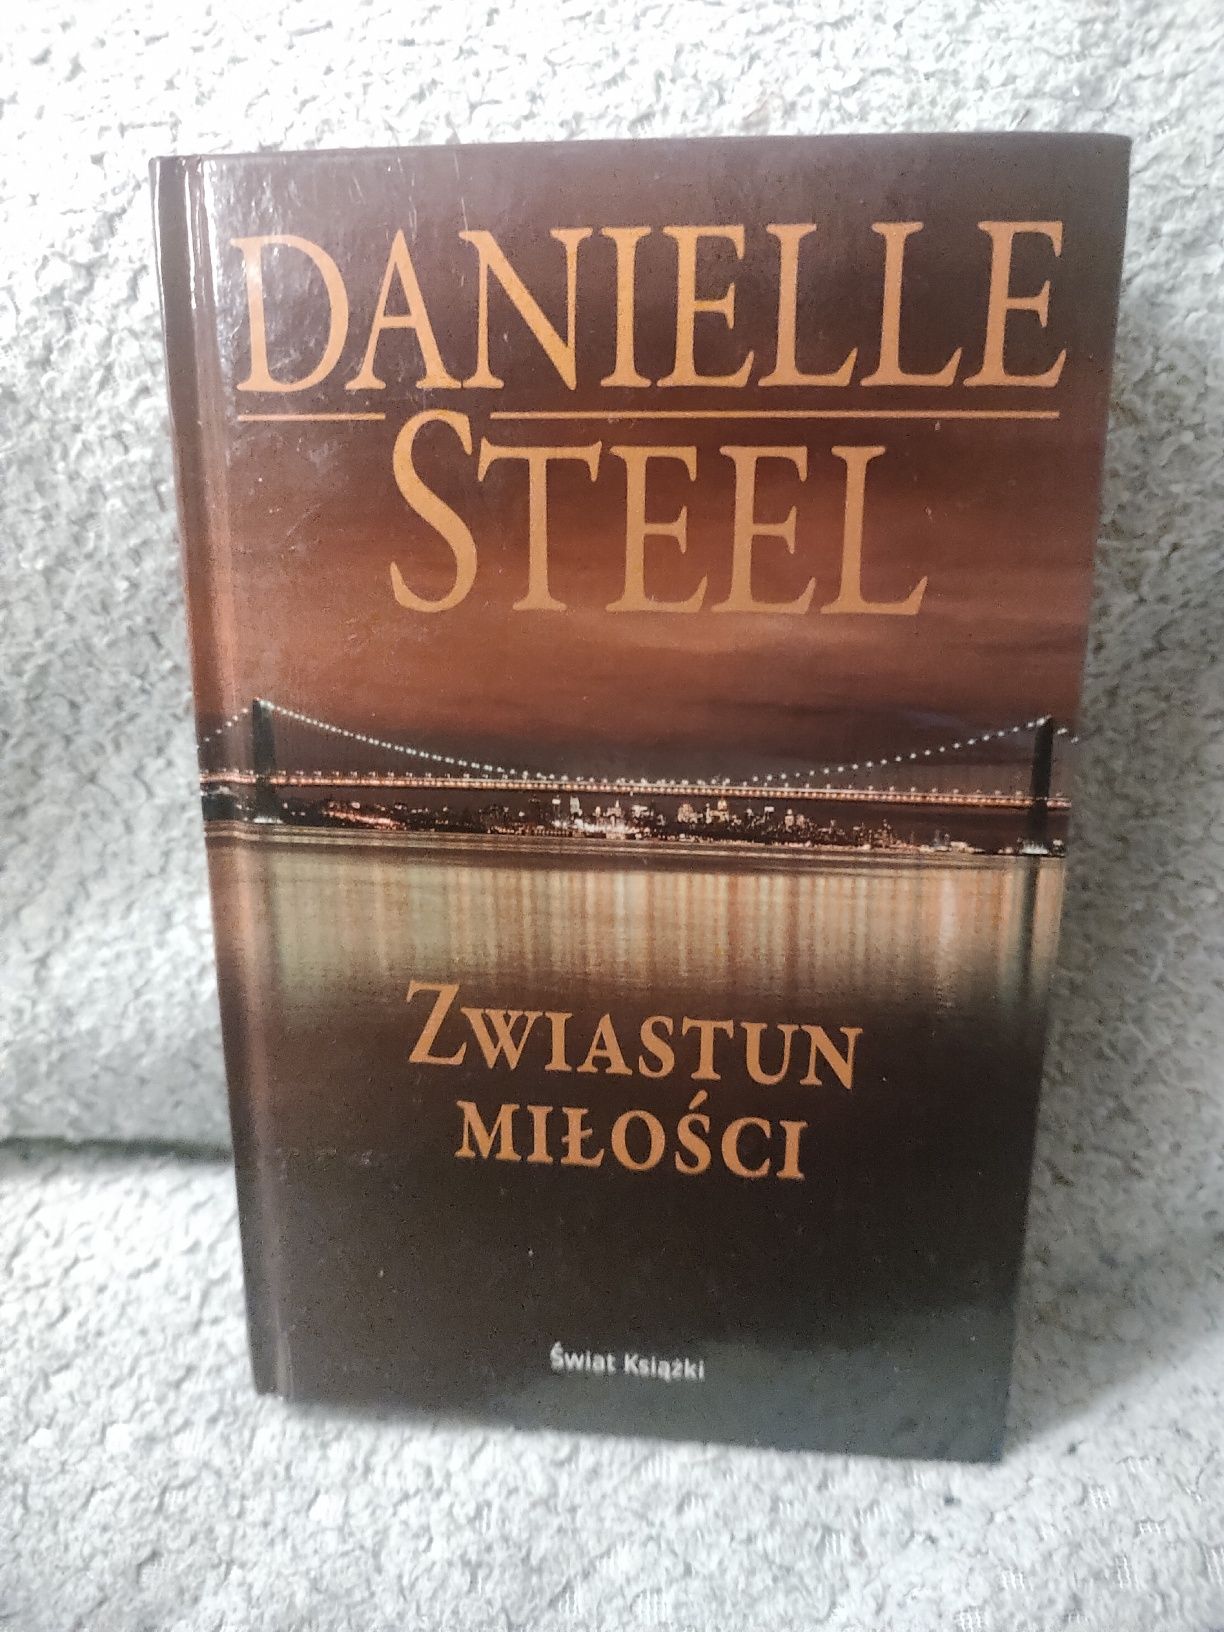 Książka Danielle Steel "Zwiastun miłości"